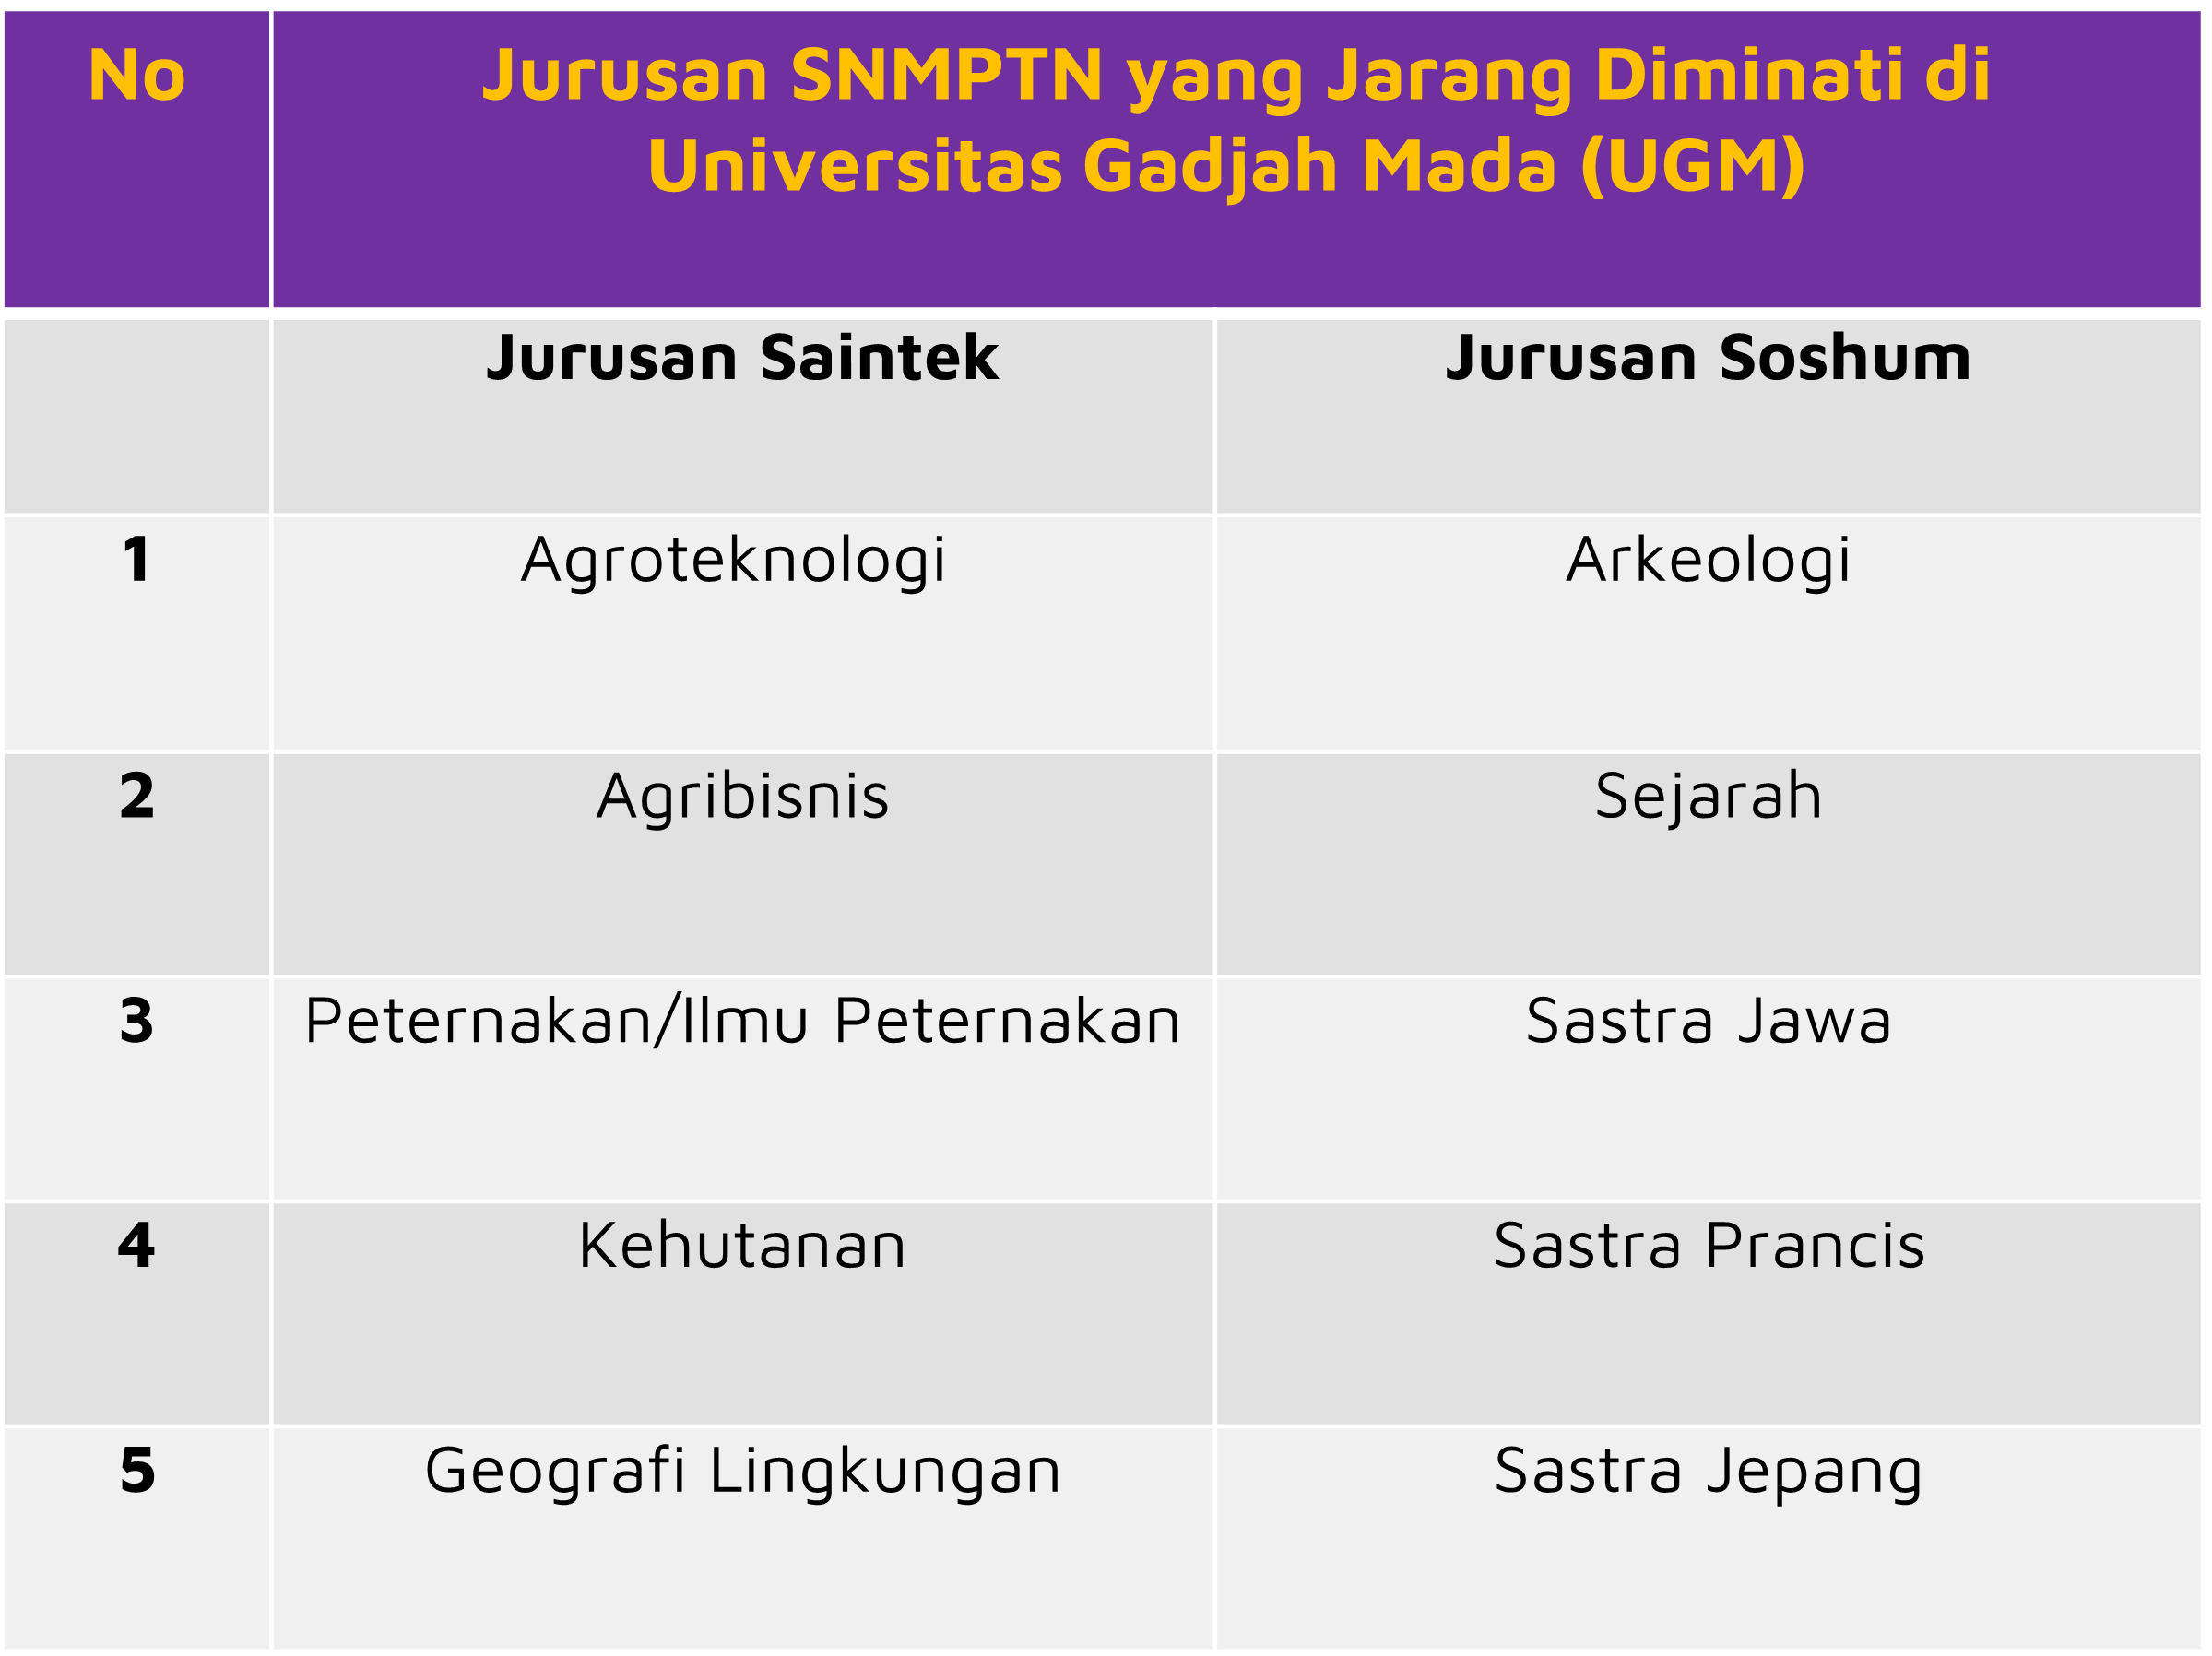 Jurusan SNMPTN yang Jarang Diminati di UGM